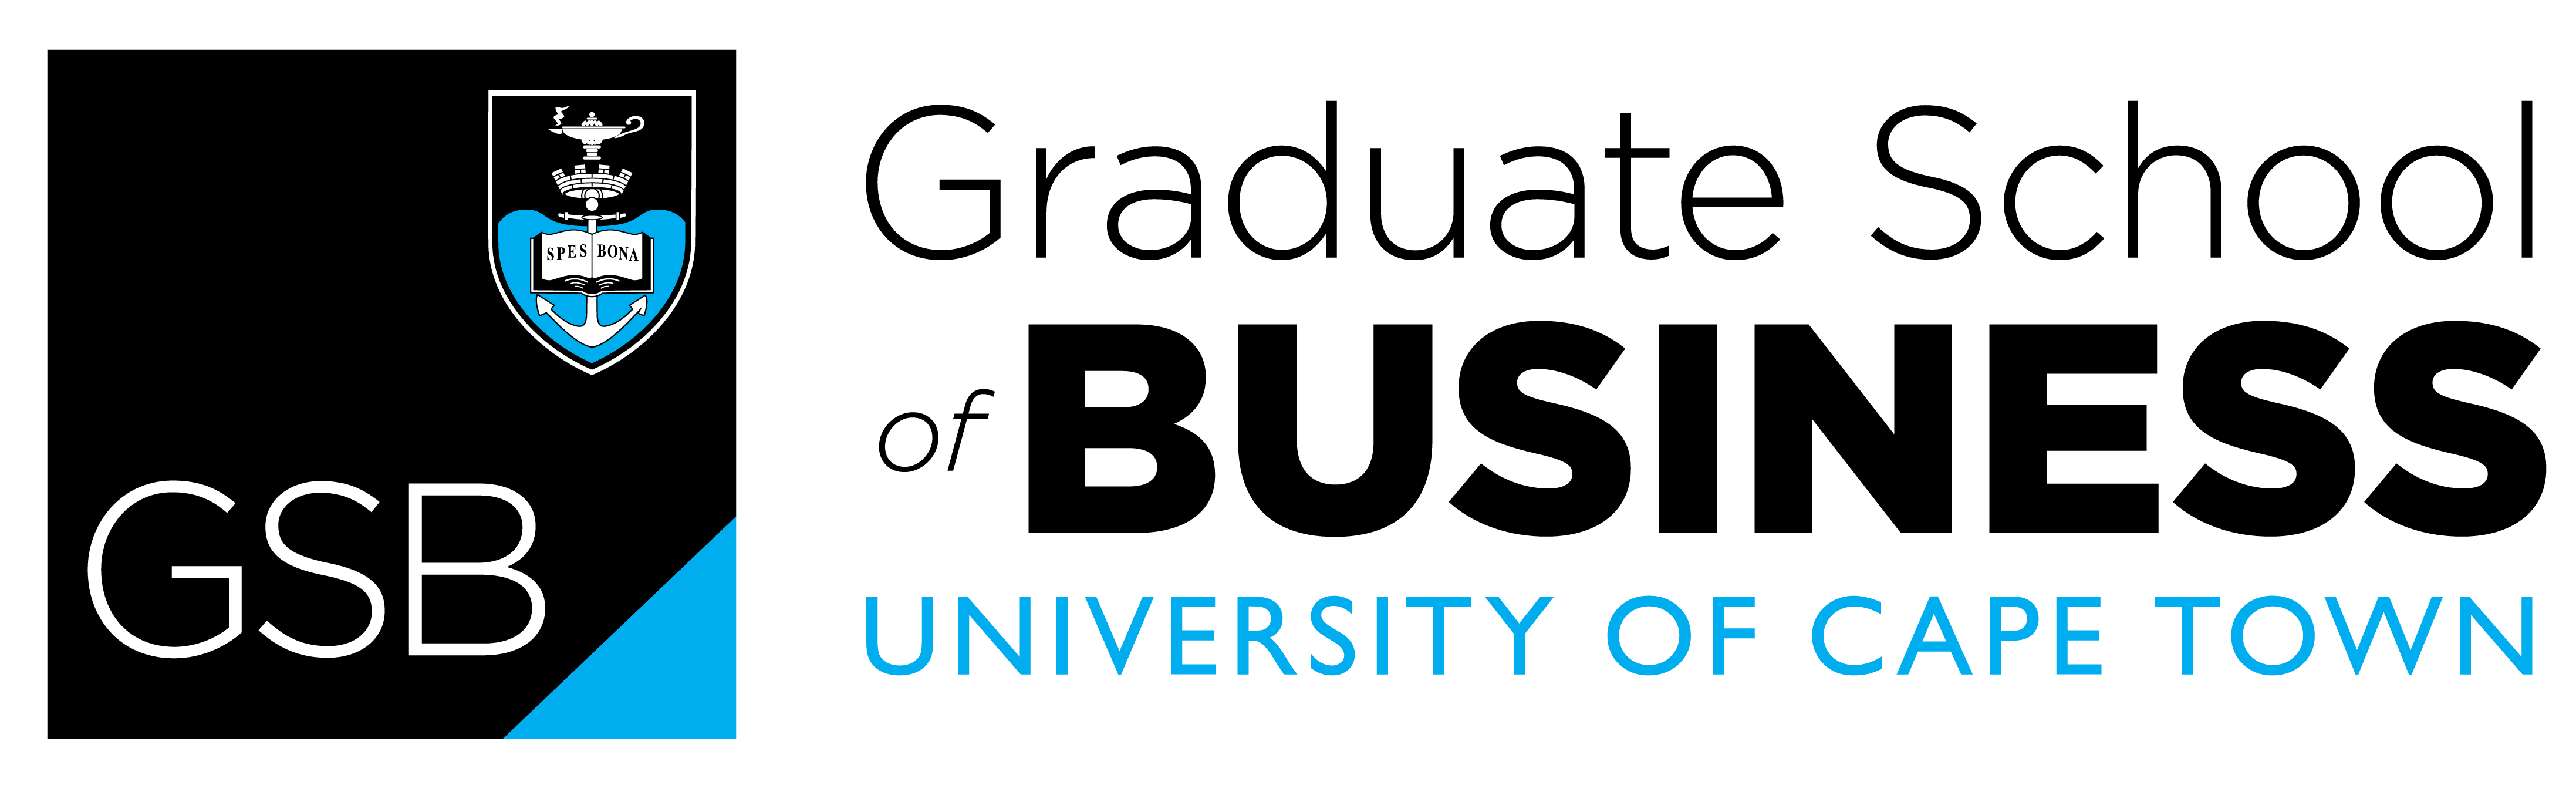 Logo University of Cape Town - UCT Graduate School of Business